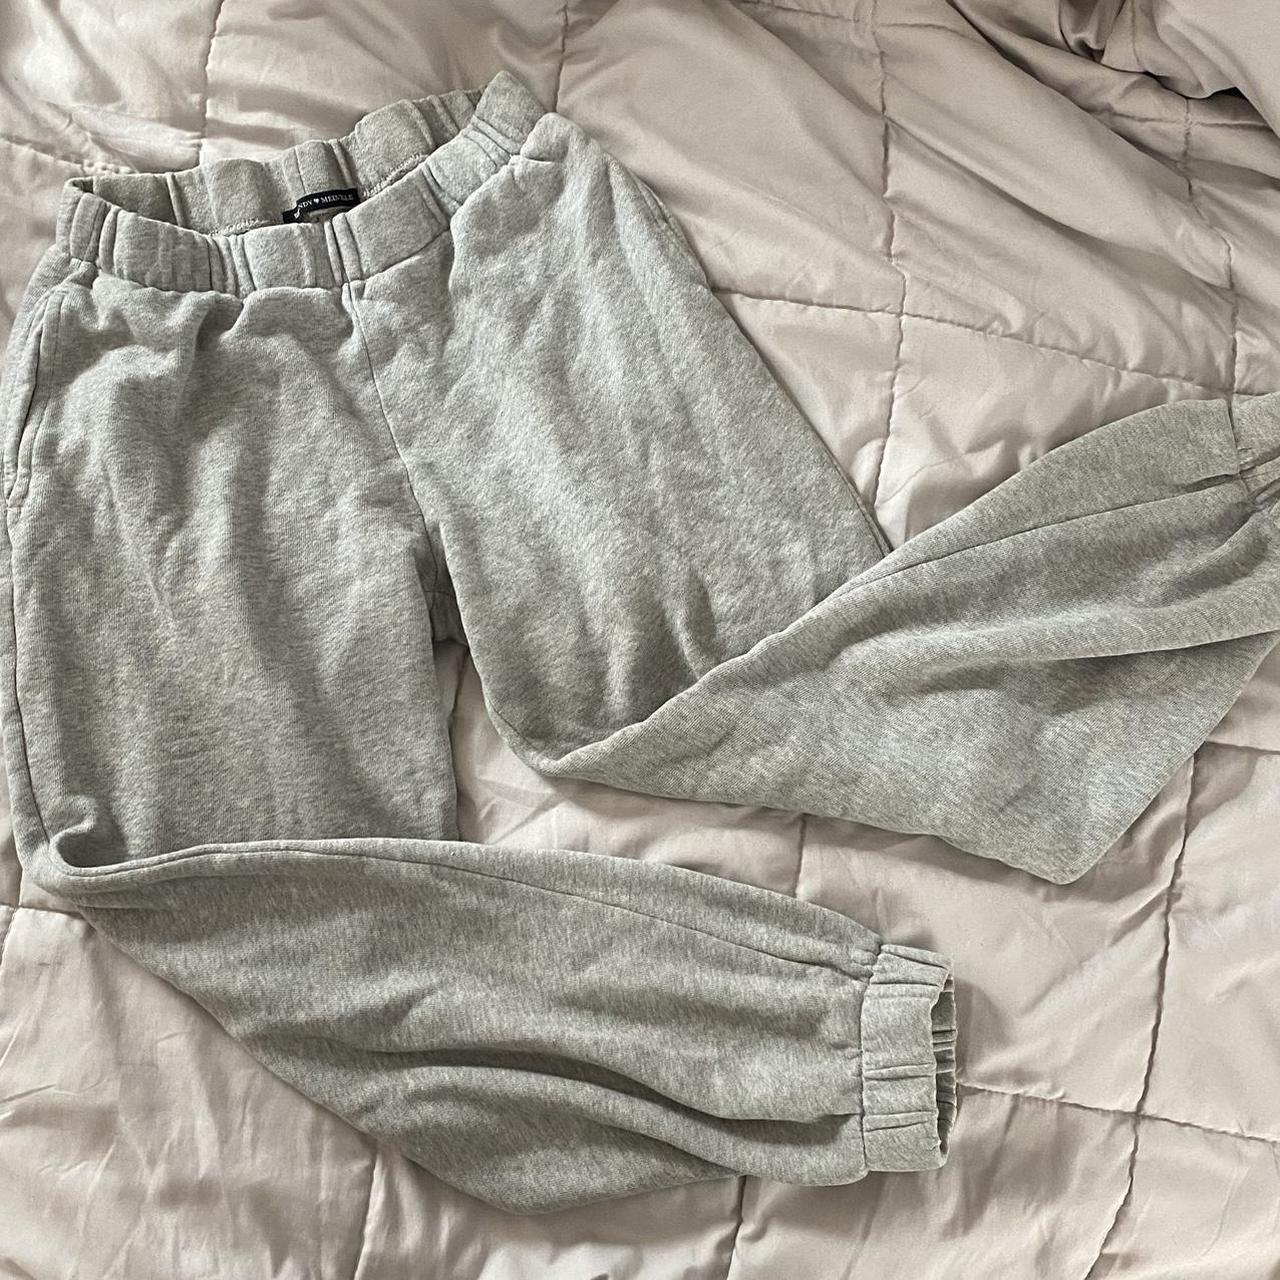 NWOT wild fable grey sweatpants so so cute just - Depop